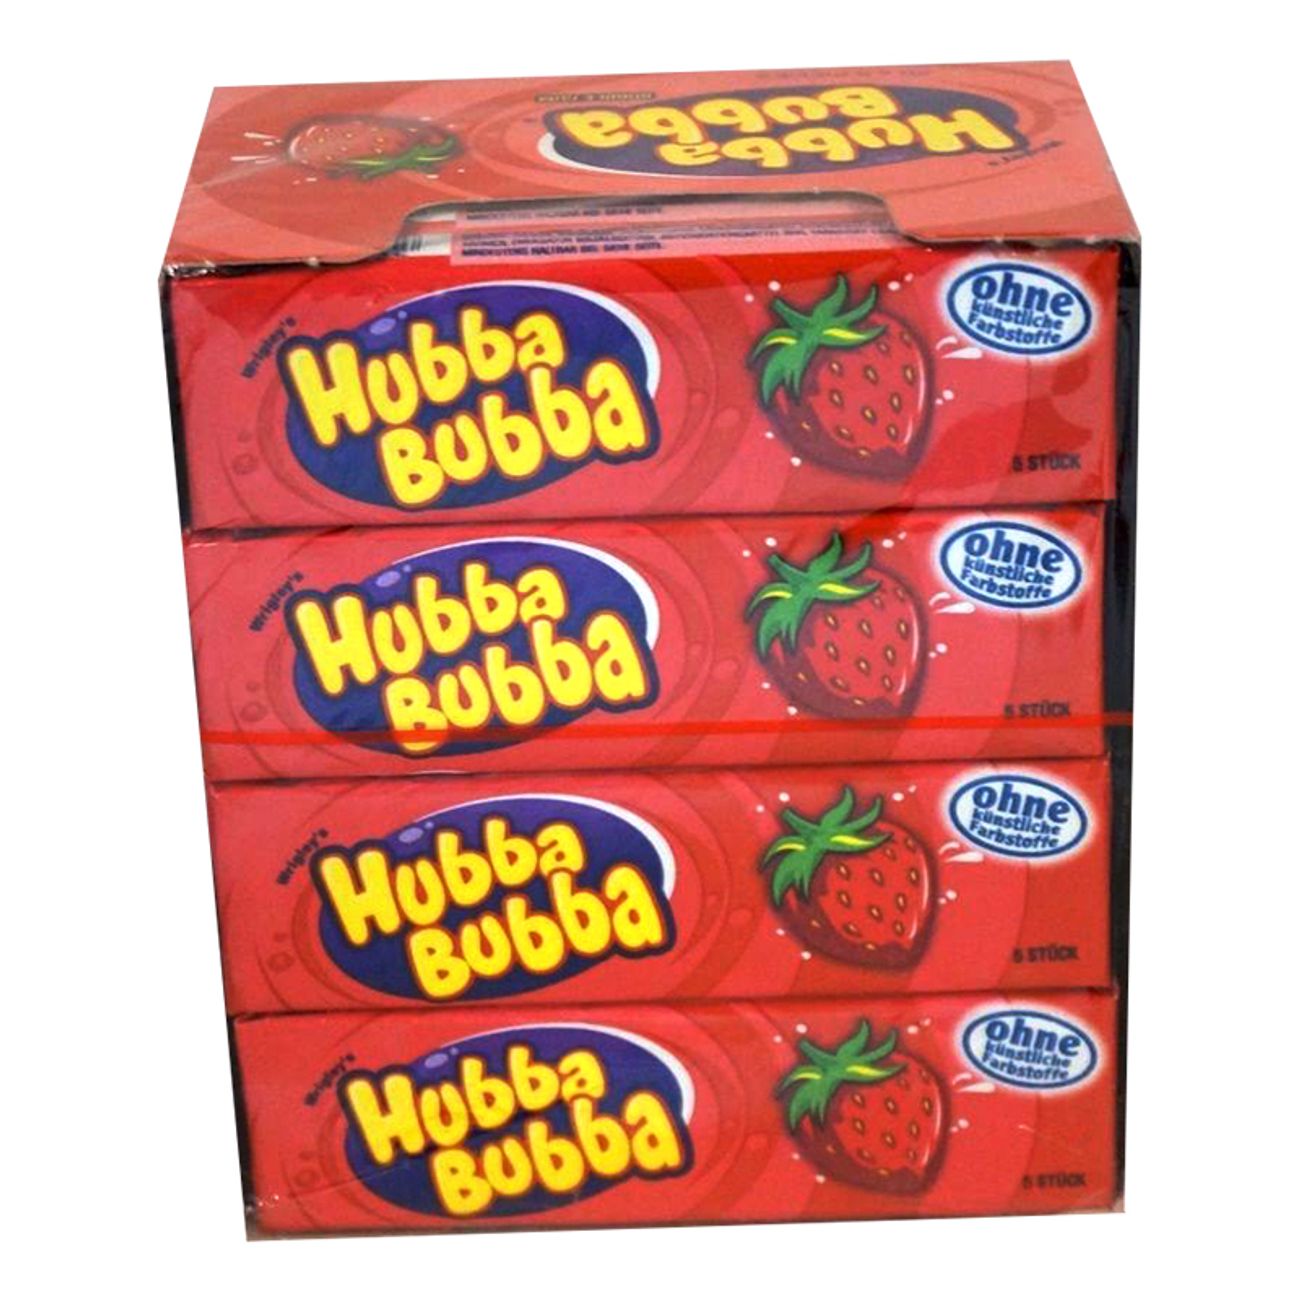 hubba-hubba-jordgubbe-2